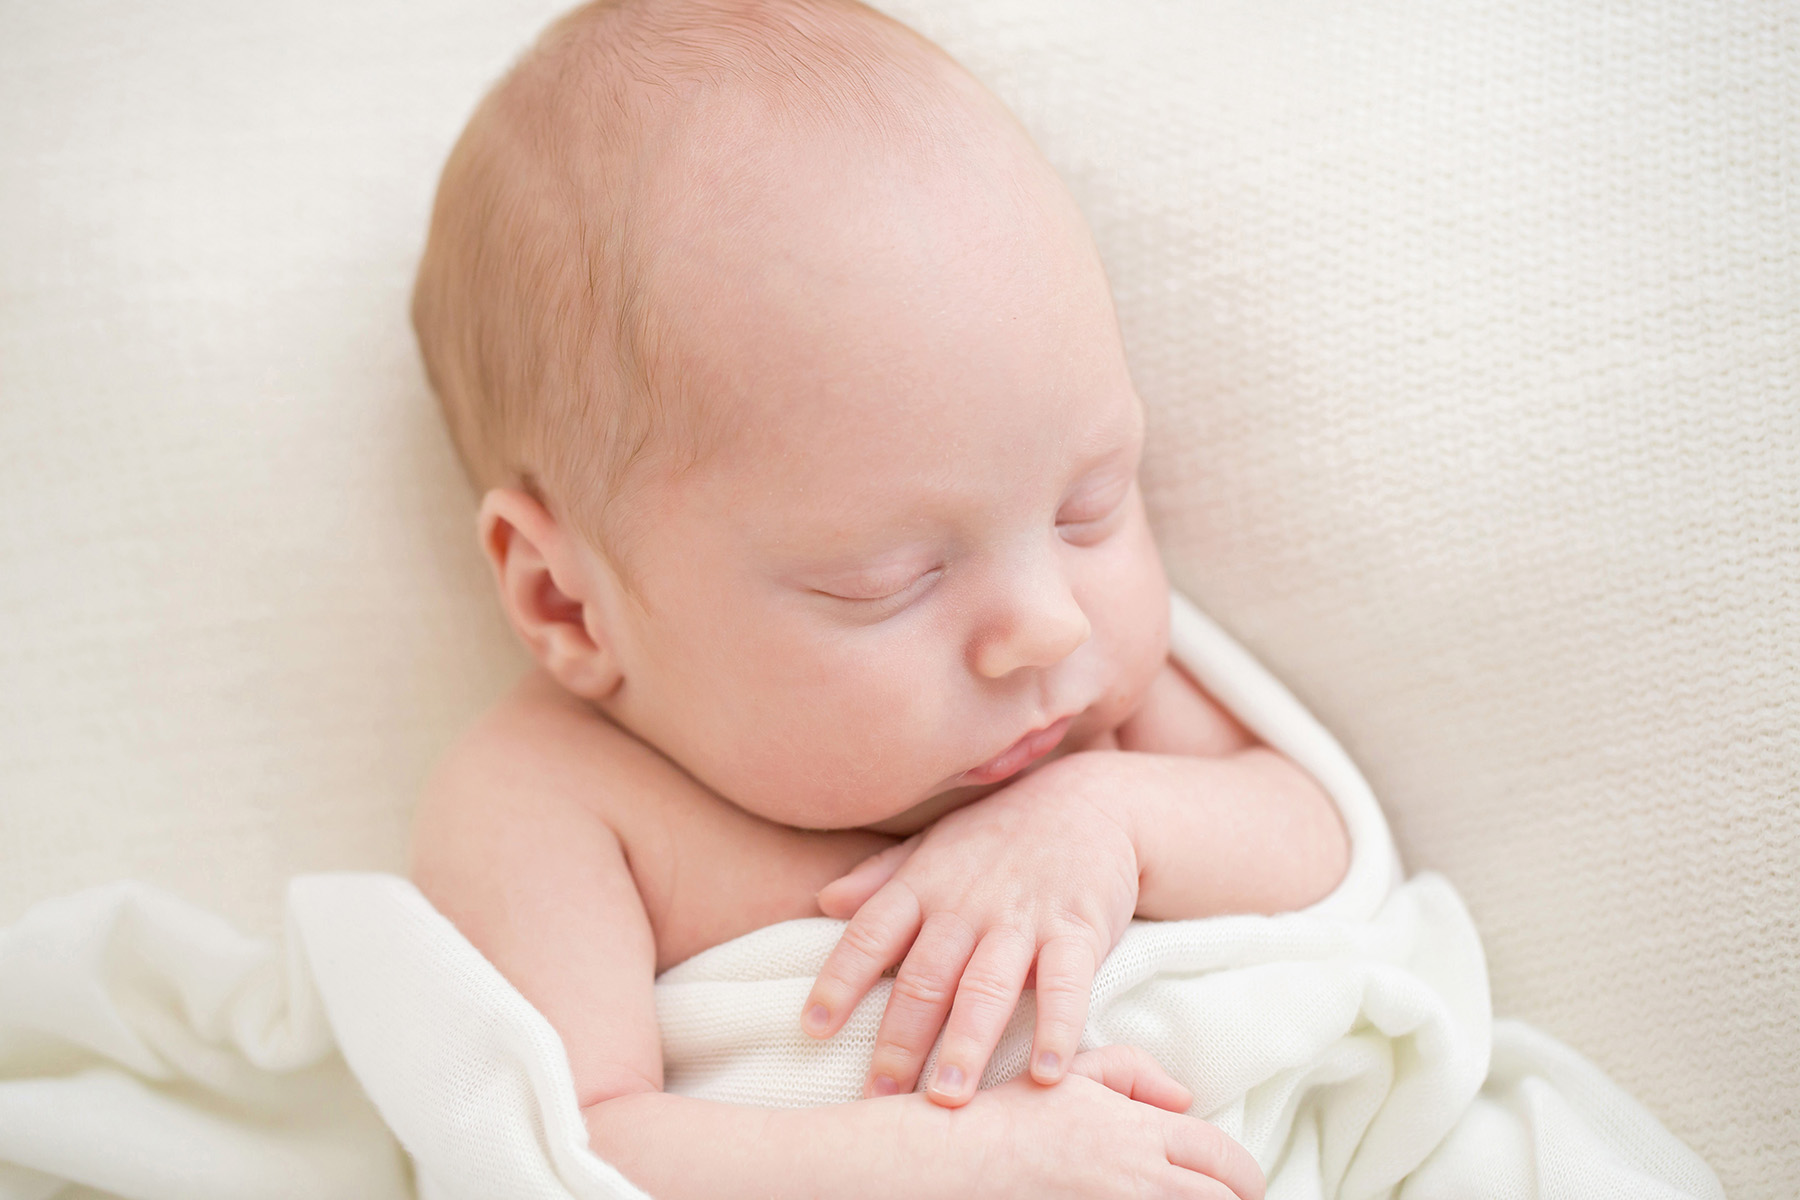 Louisville KY Newborn photographer | Julie Brock Photography | Photography studio in Louisville | sweet and natural newborn photography with baby no blanket.jpg